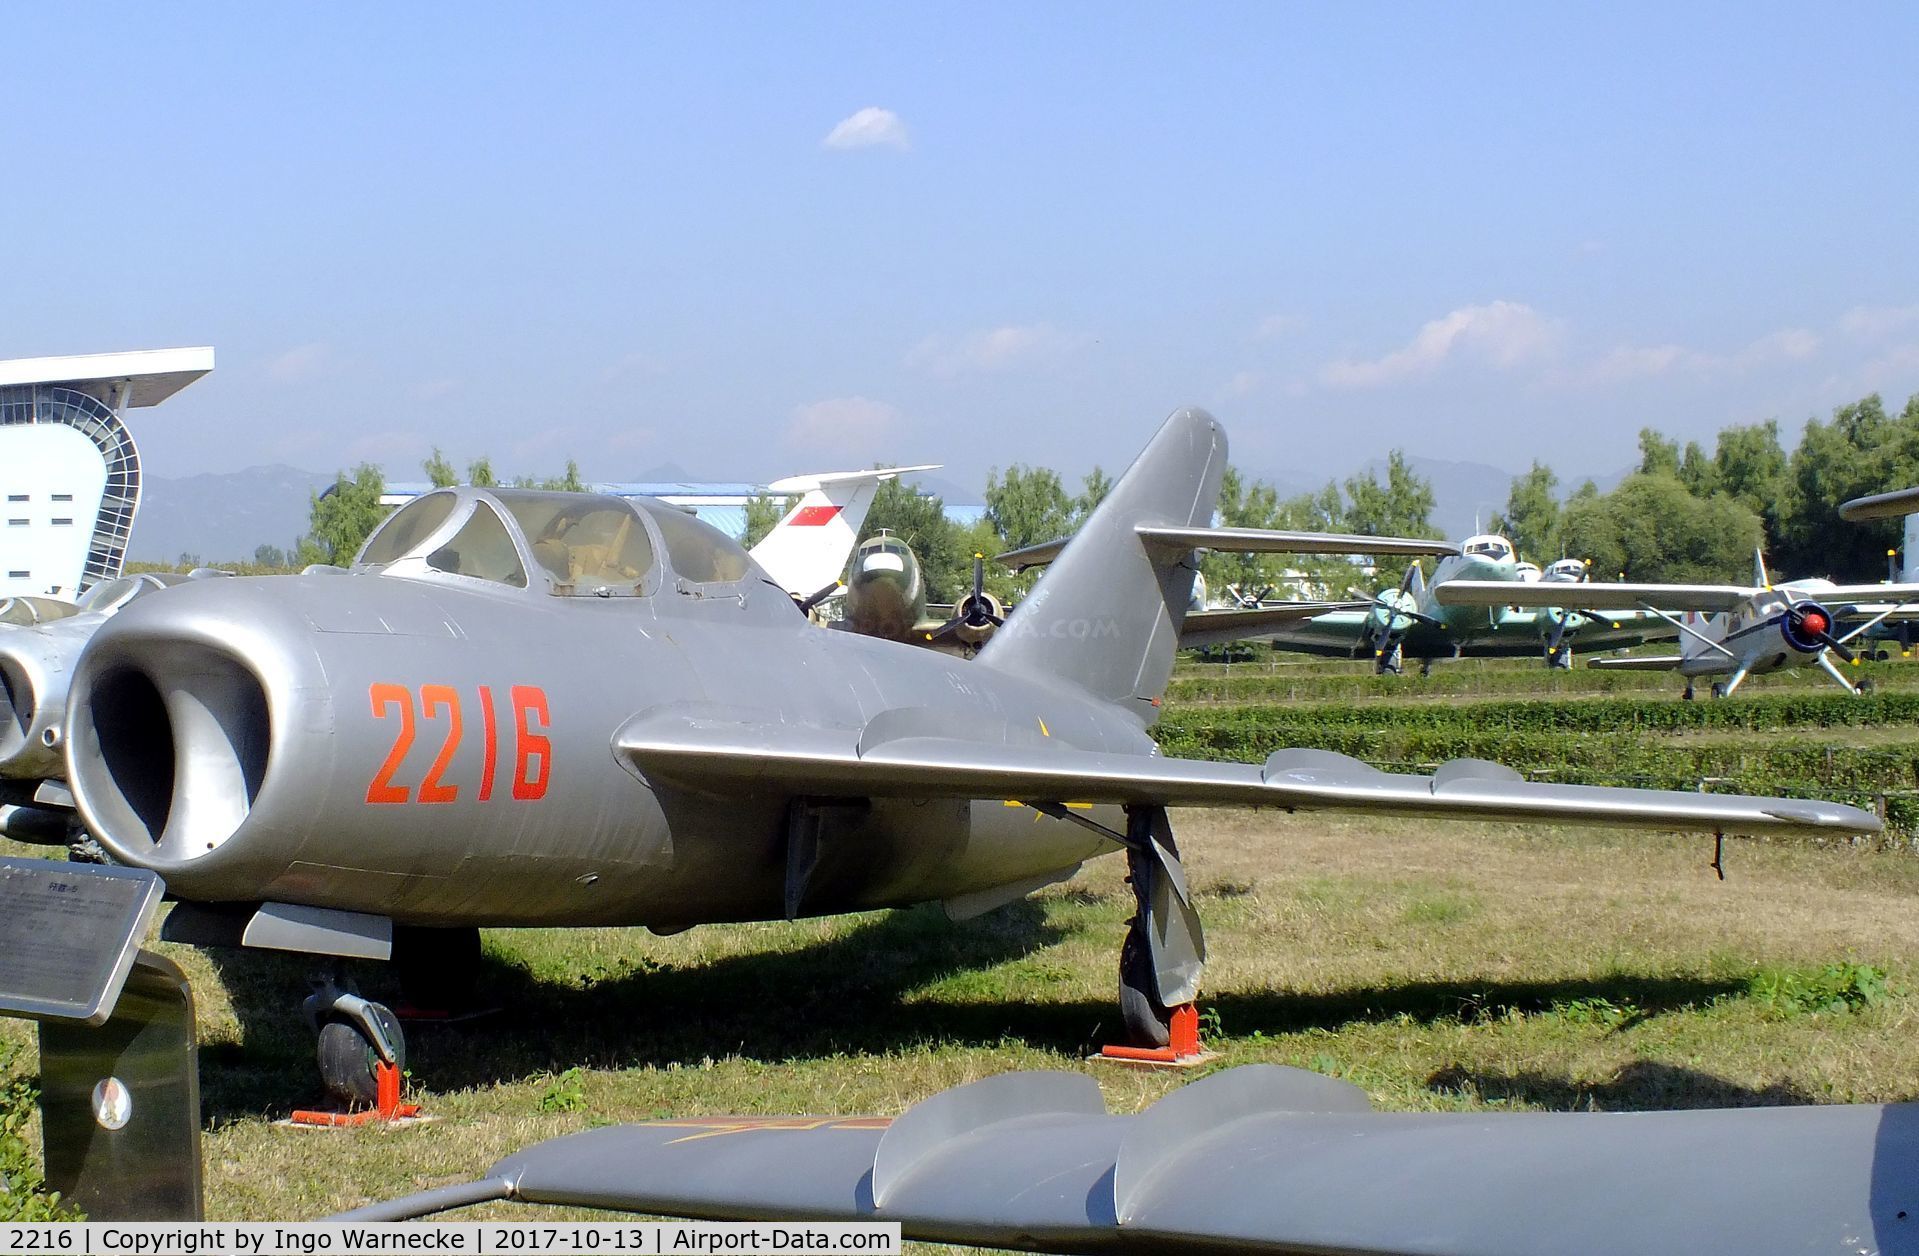 2216, Shenyang JJ-5 C/N 550216, Shenyang JJ-5 (chinese two-seater version of the MiG-17) at the China Aviation Museum Datangshan